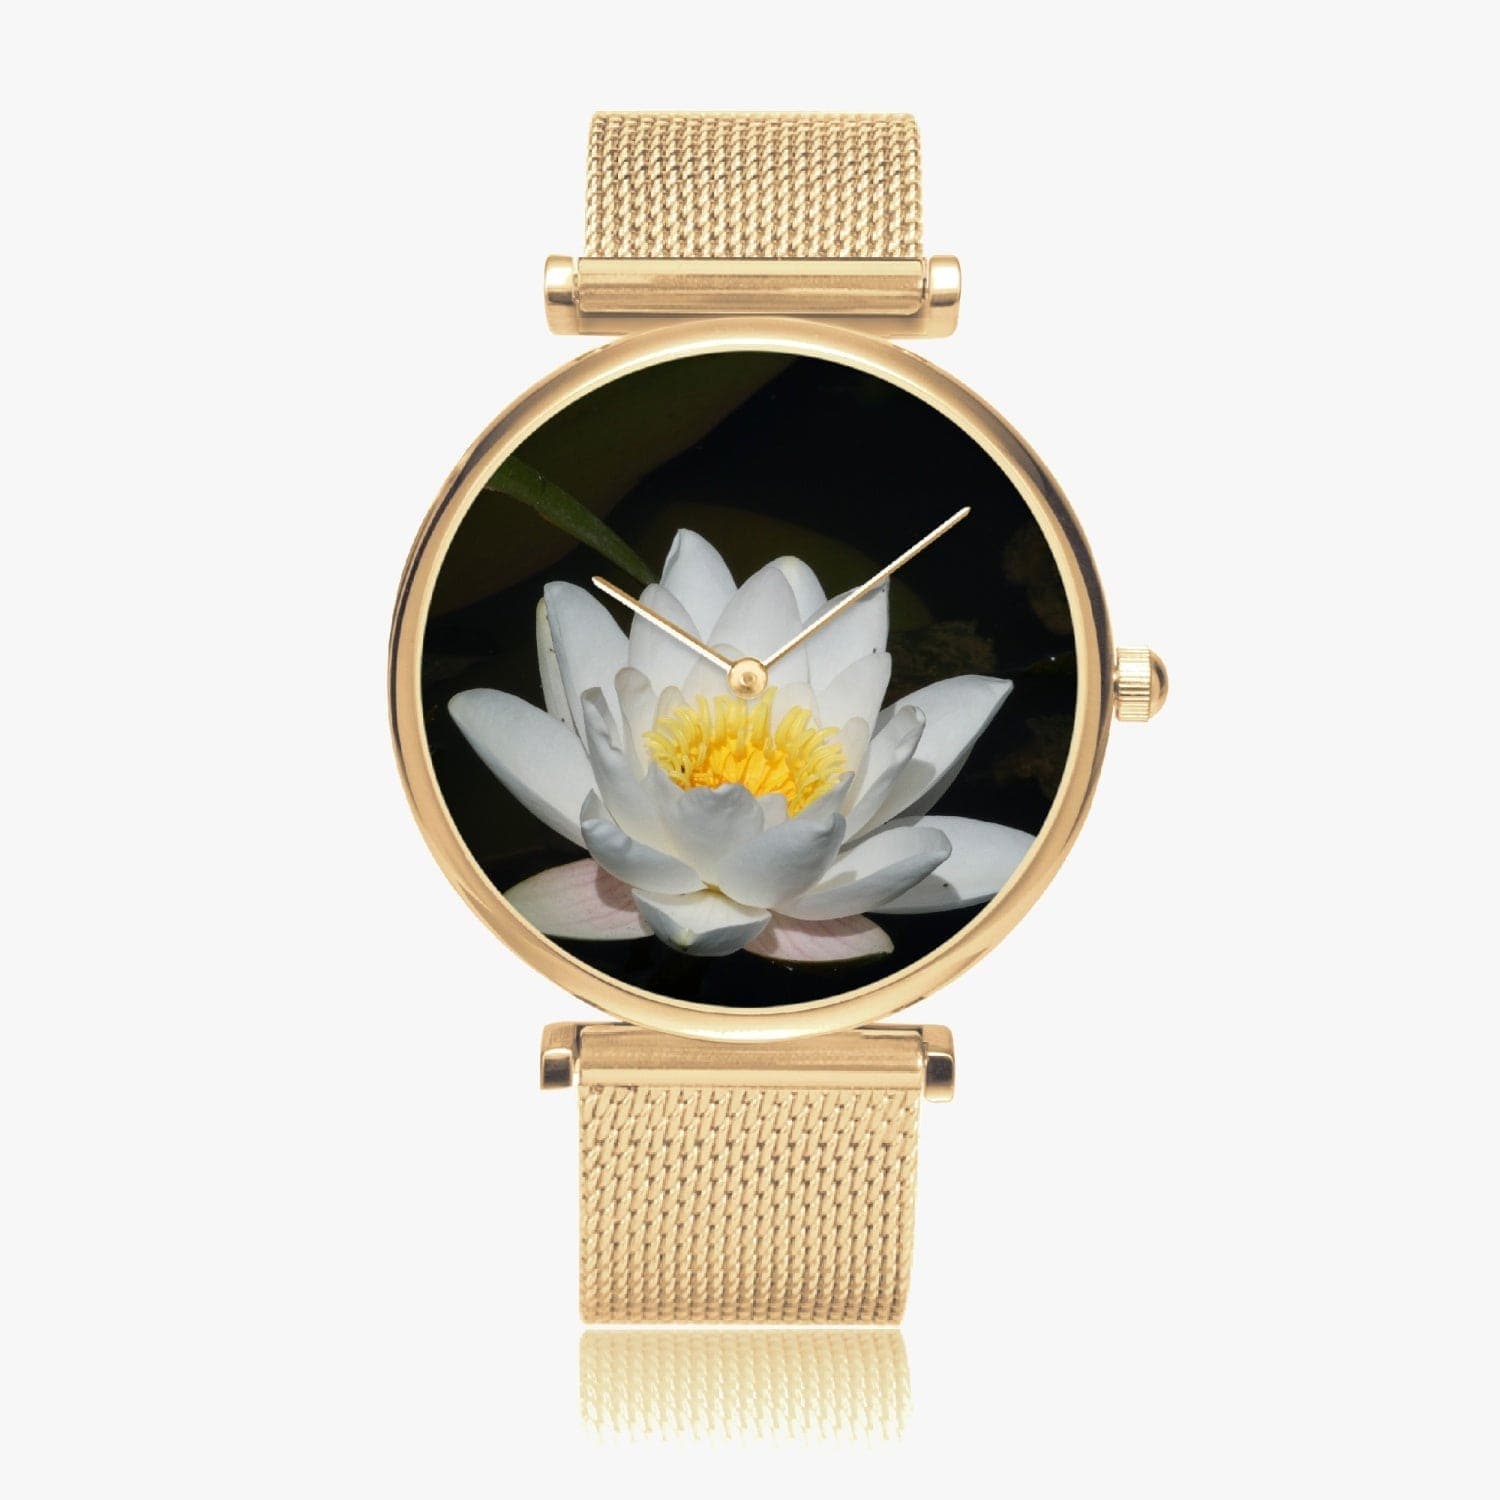 Water lilly. New Stylish Ultra-Thin Quartz Watch, designed by Ingrid Hütten